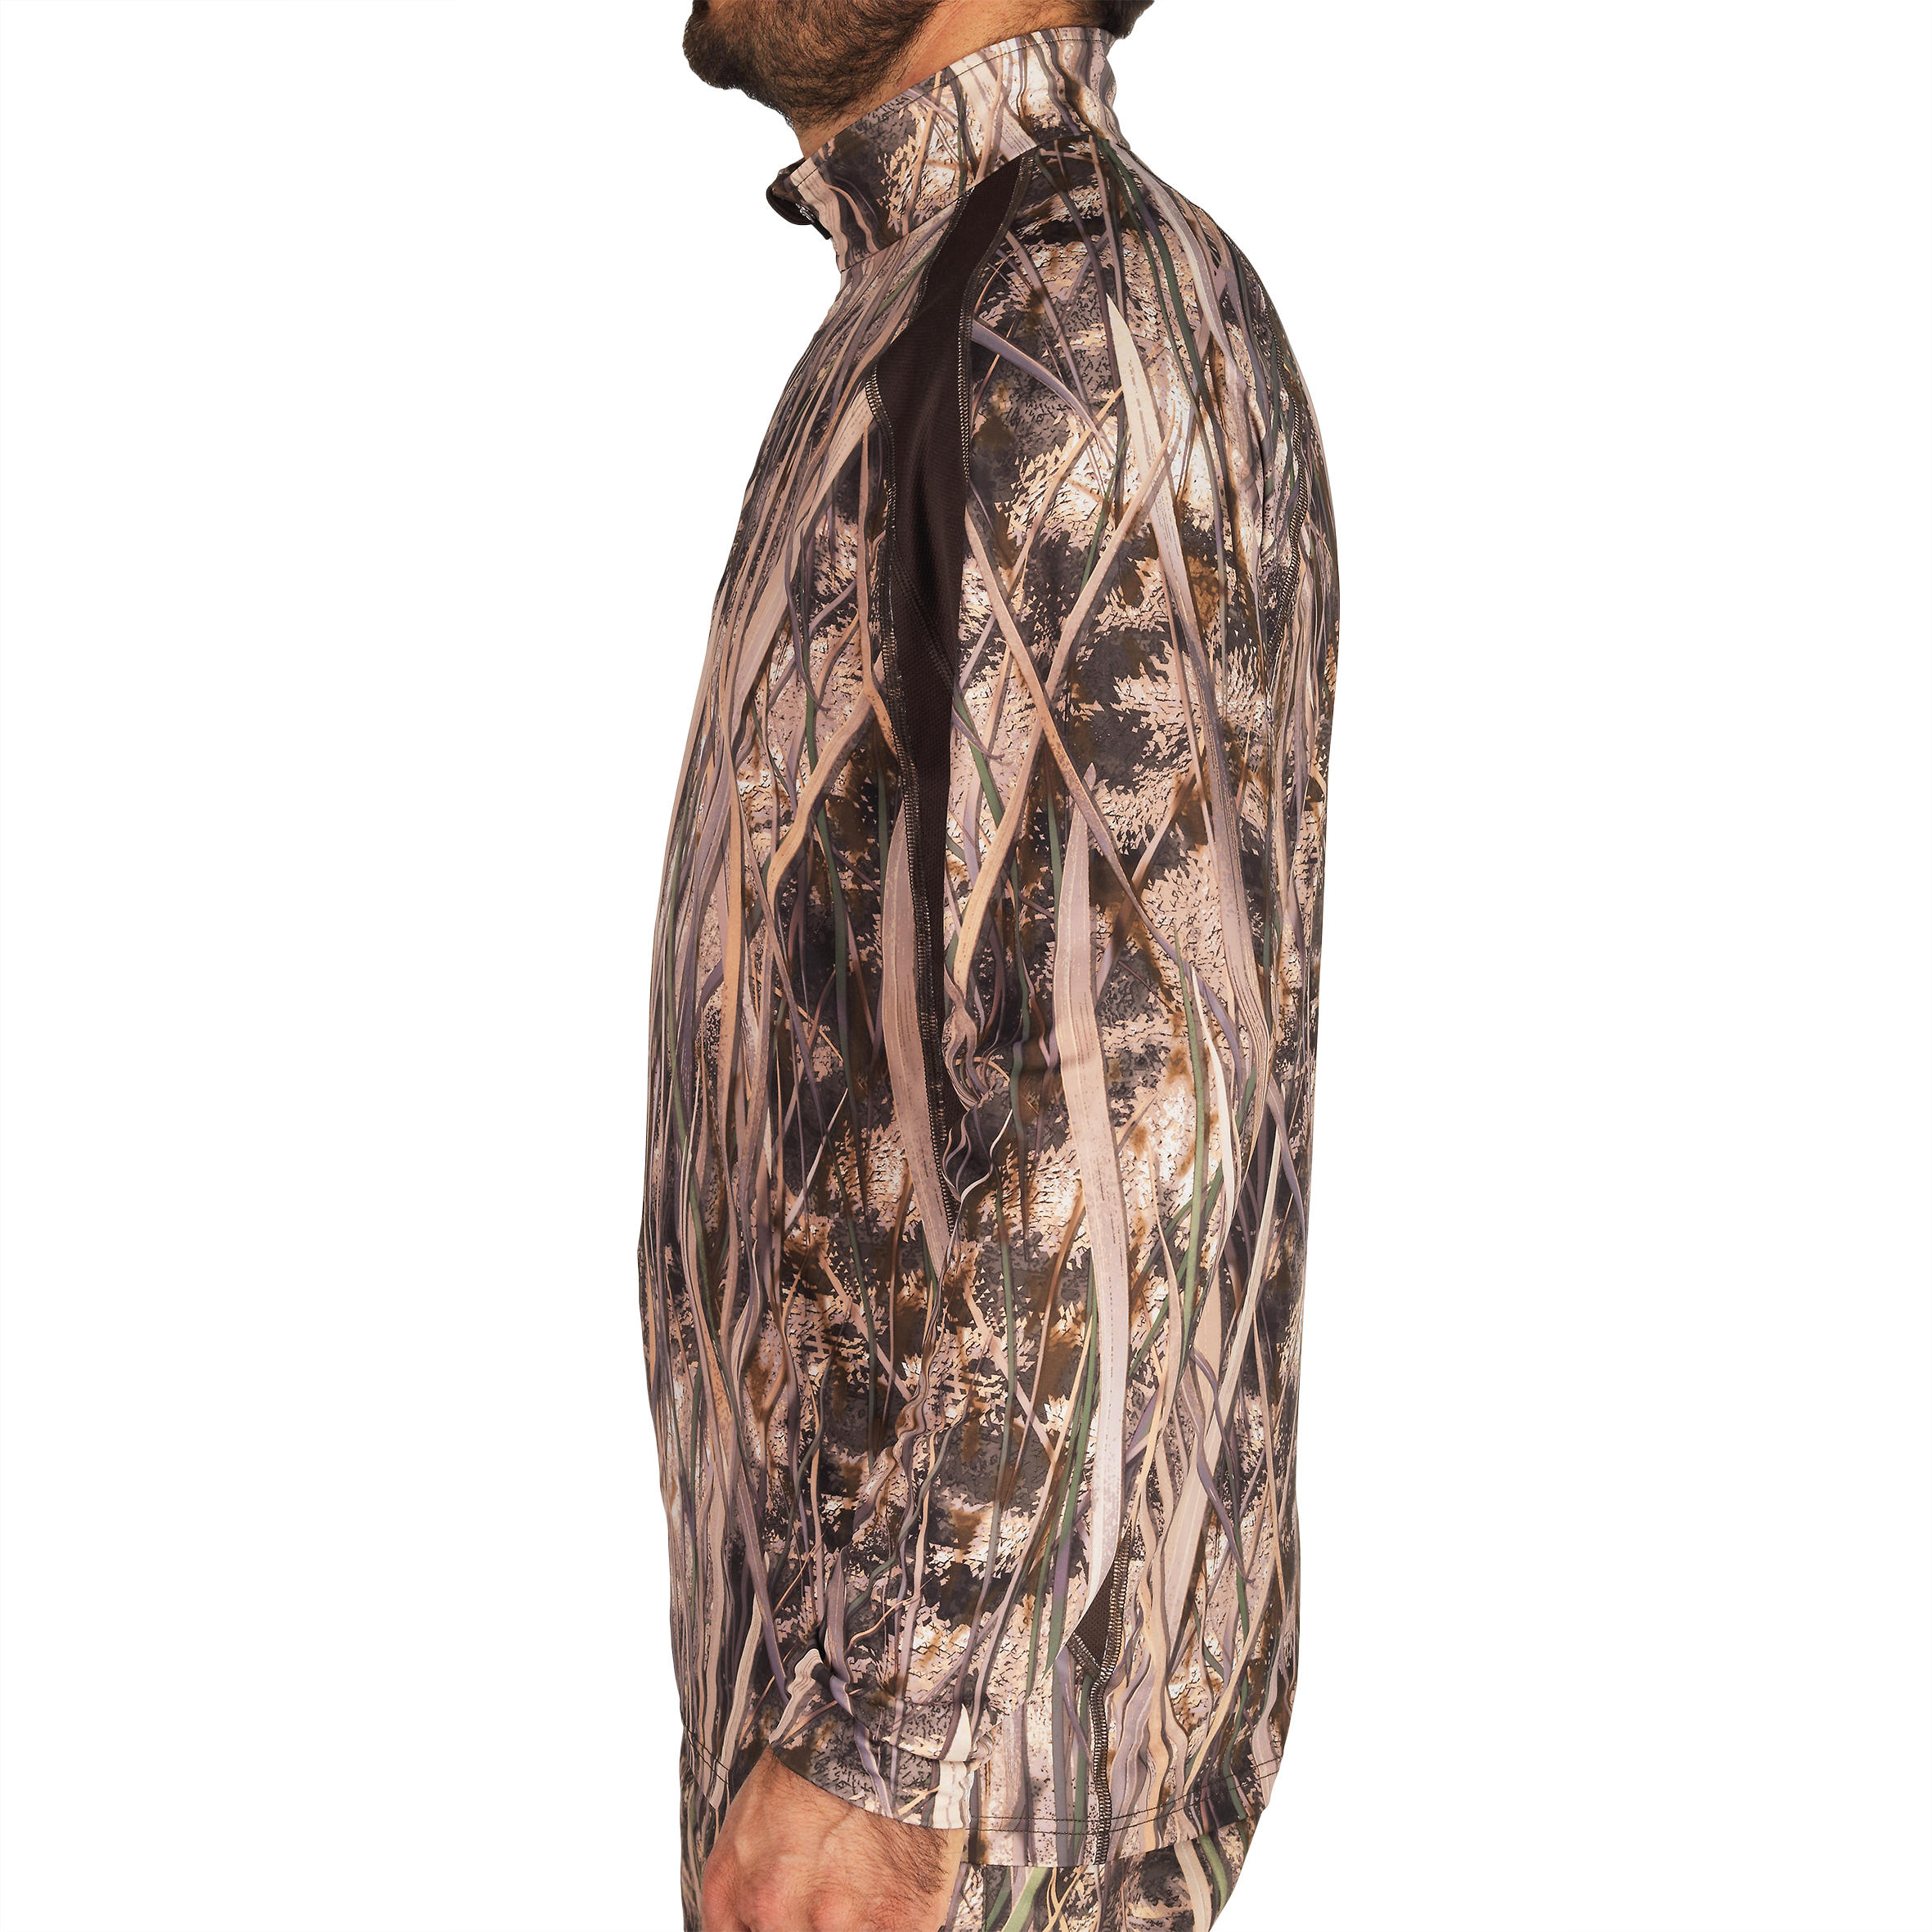 500 Breathable Long Sleeve T-shirt - Wetlands Camo 4/8